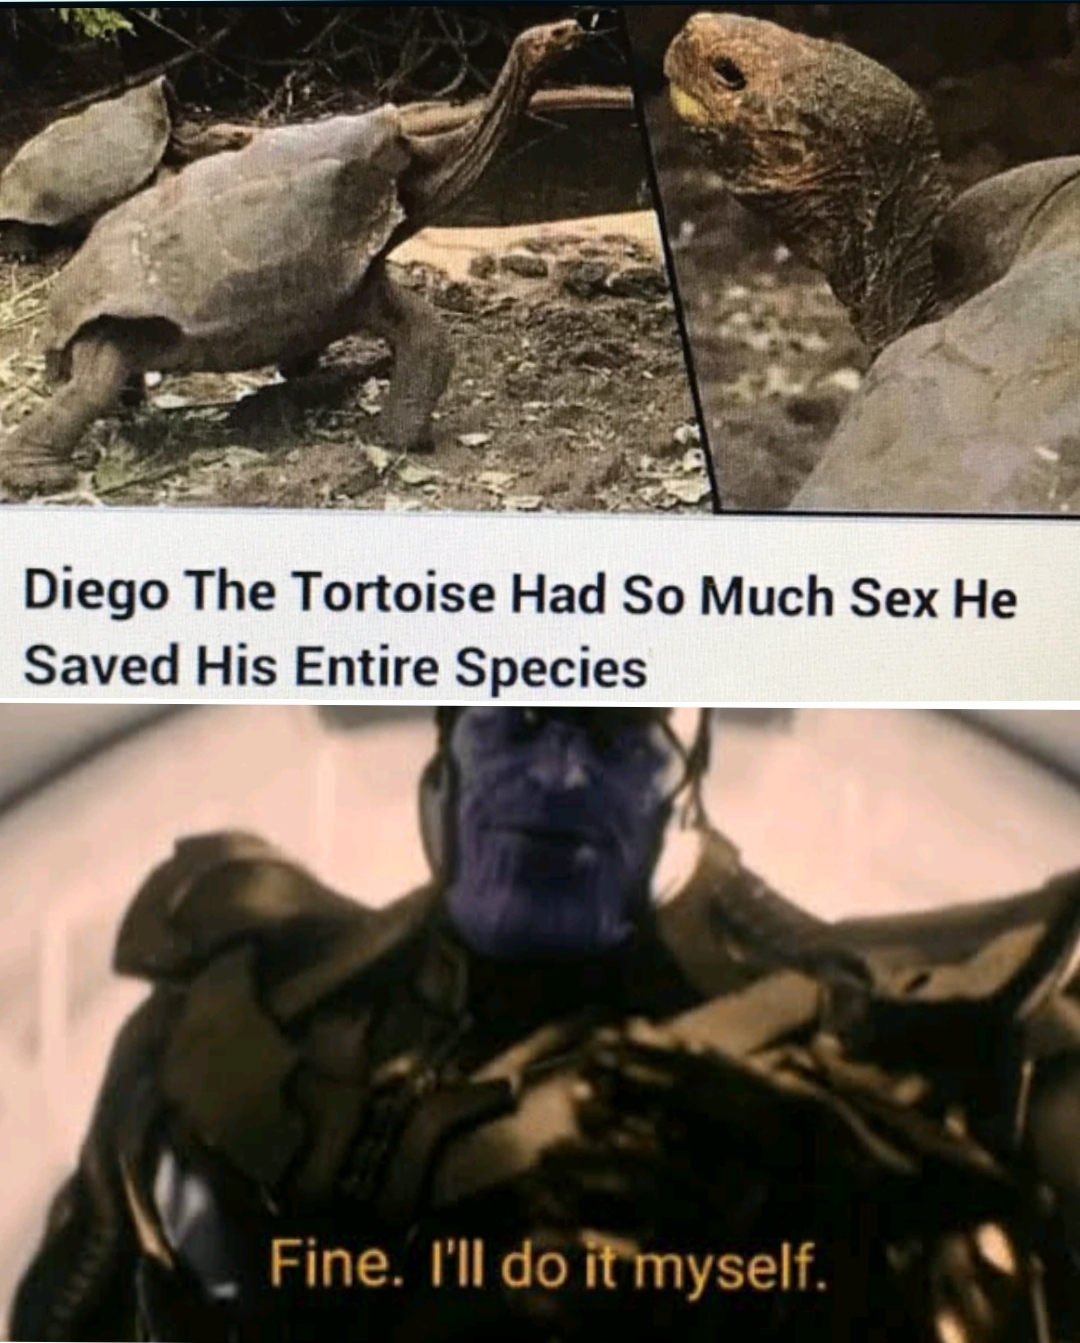 Carefully, he’s a hero